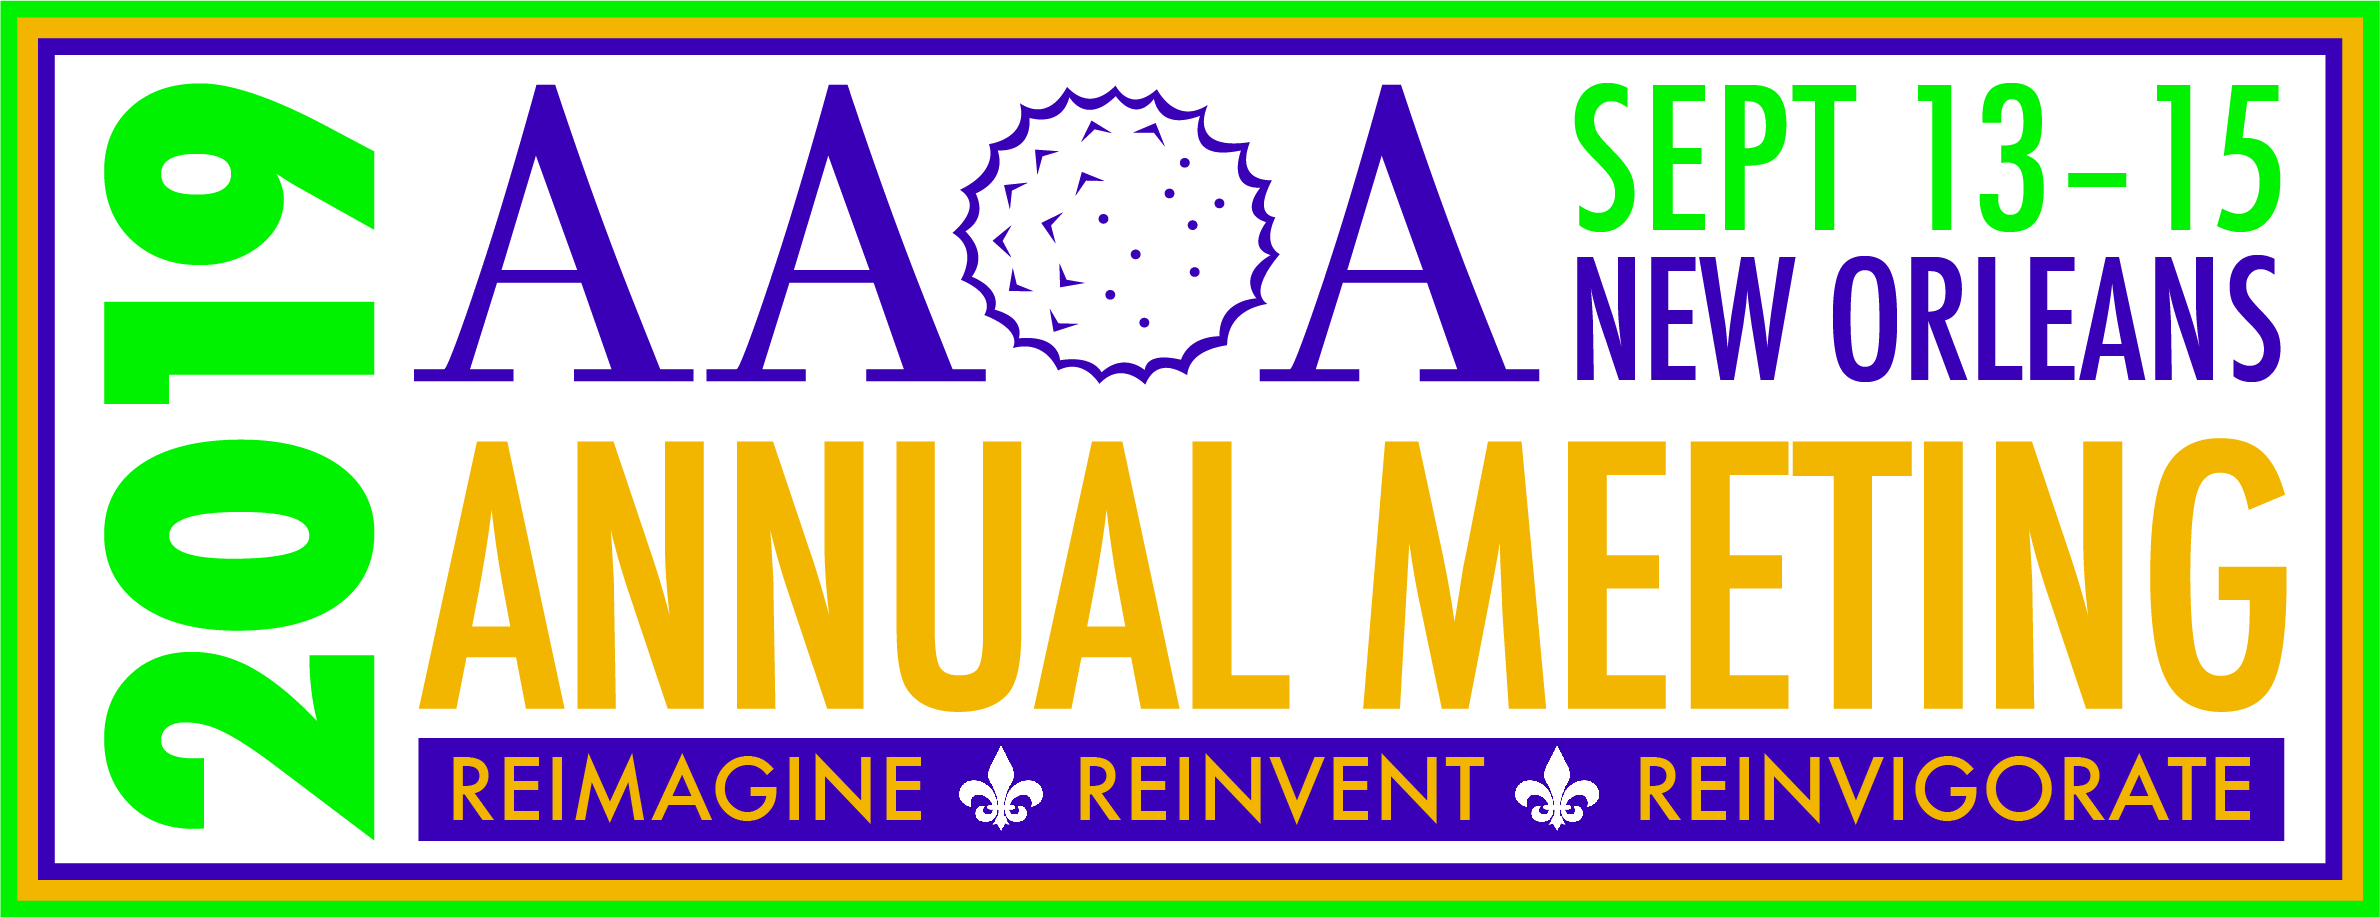 AAOA Annual Meeting 2019 American Academy of Otolaryngic Allergy